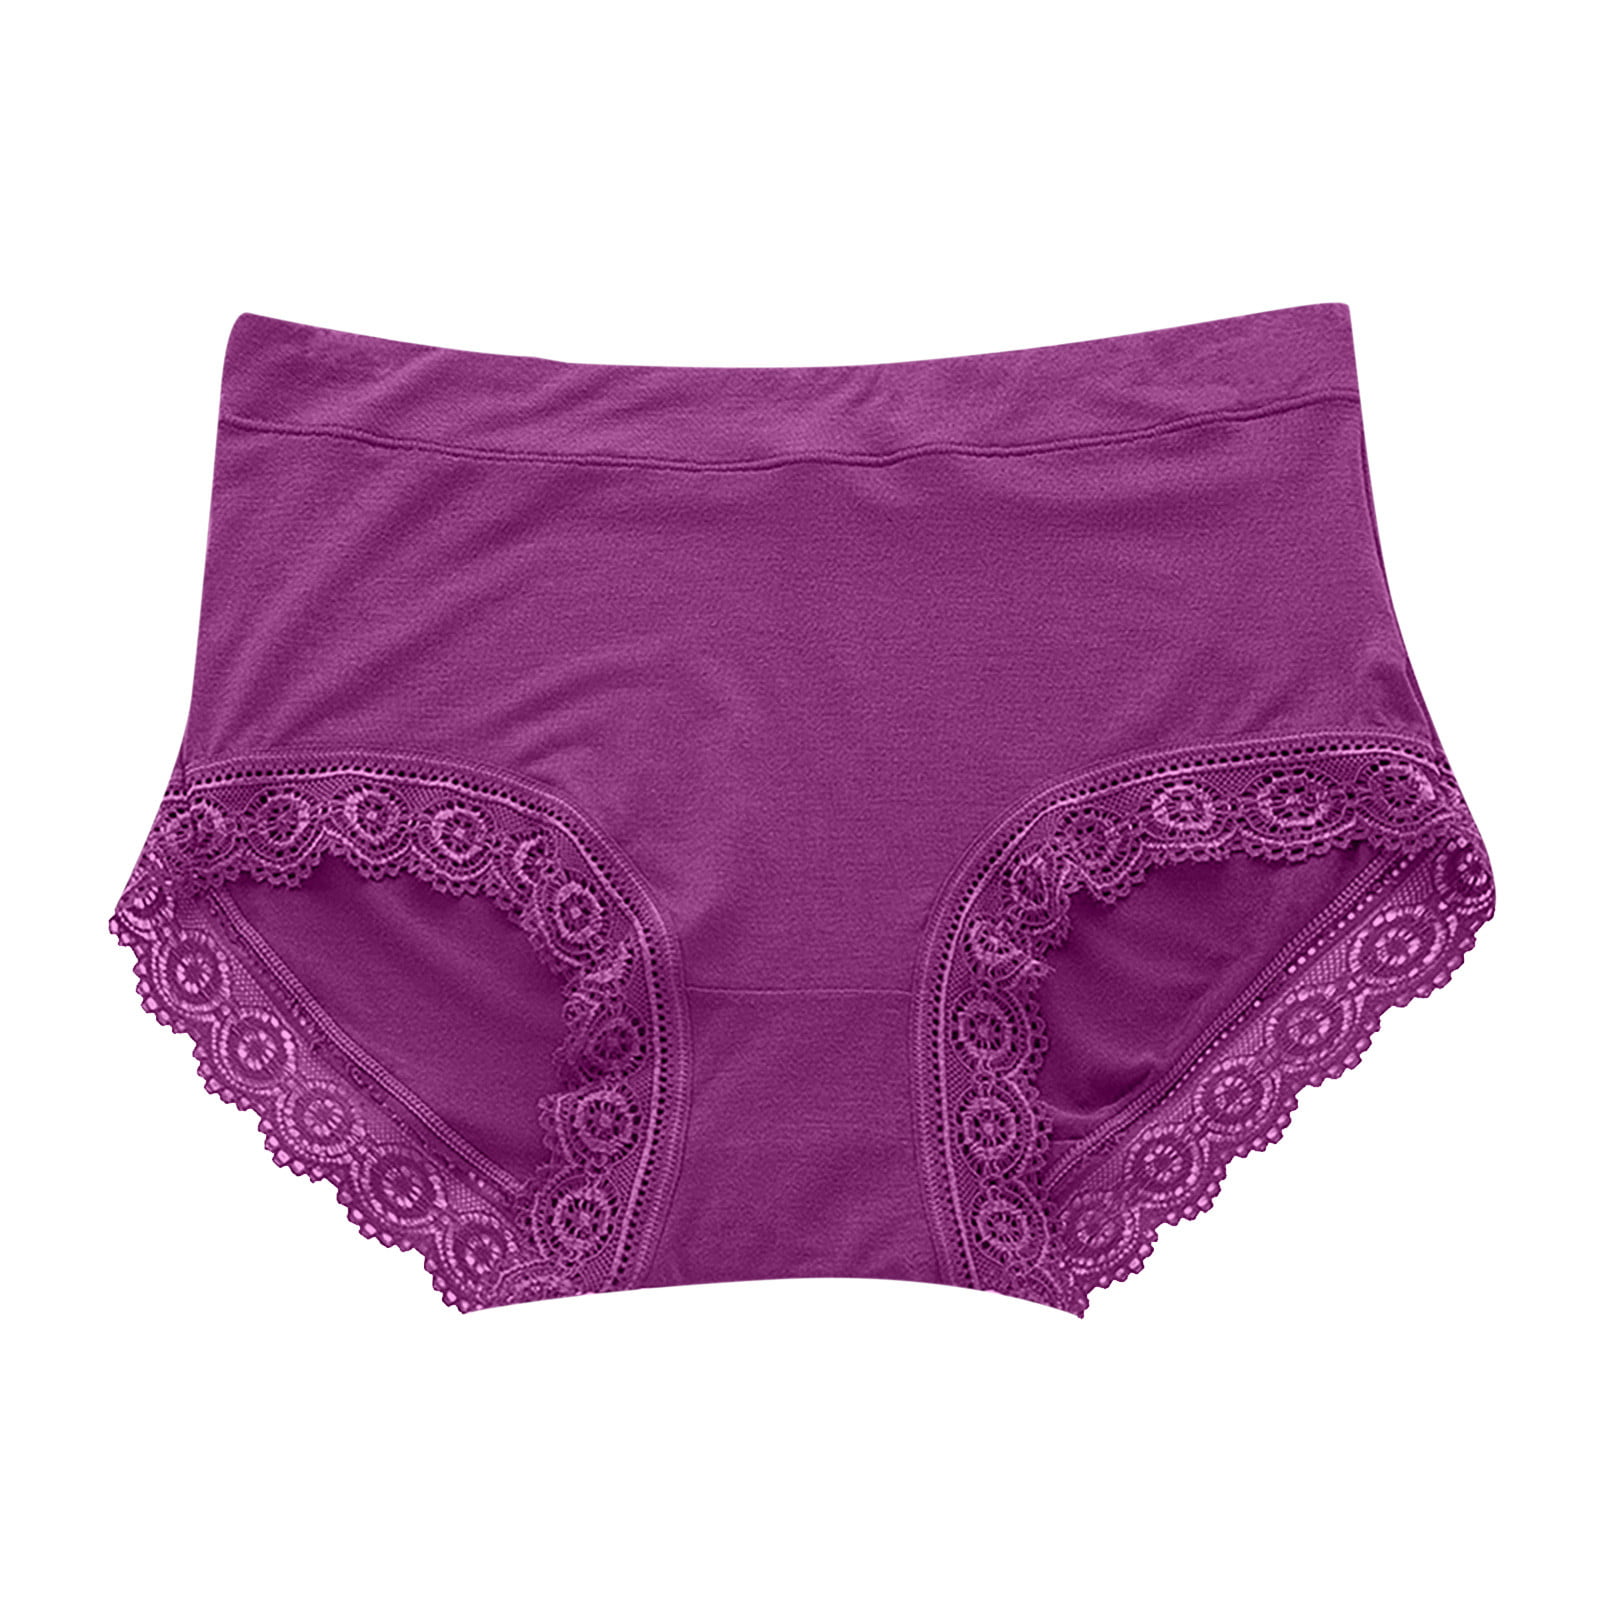 Buy VANILLAFUDGE Multicolor Cotton Panties for Women's (purple 2xl